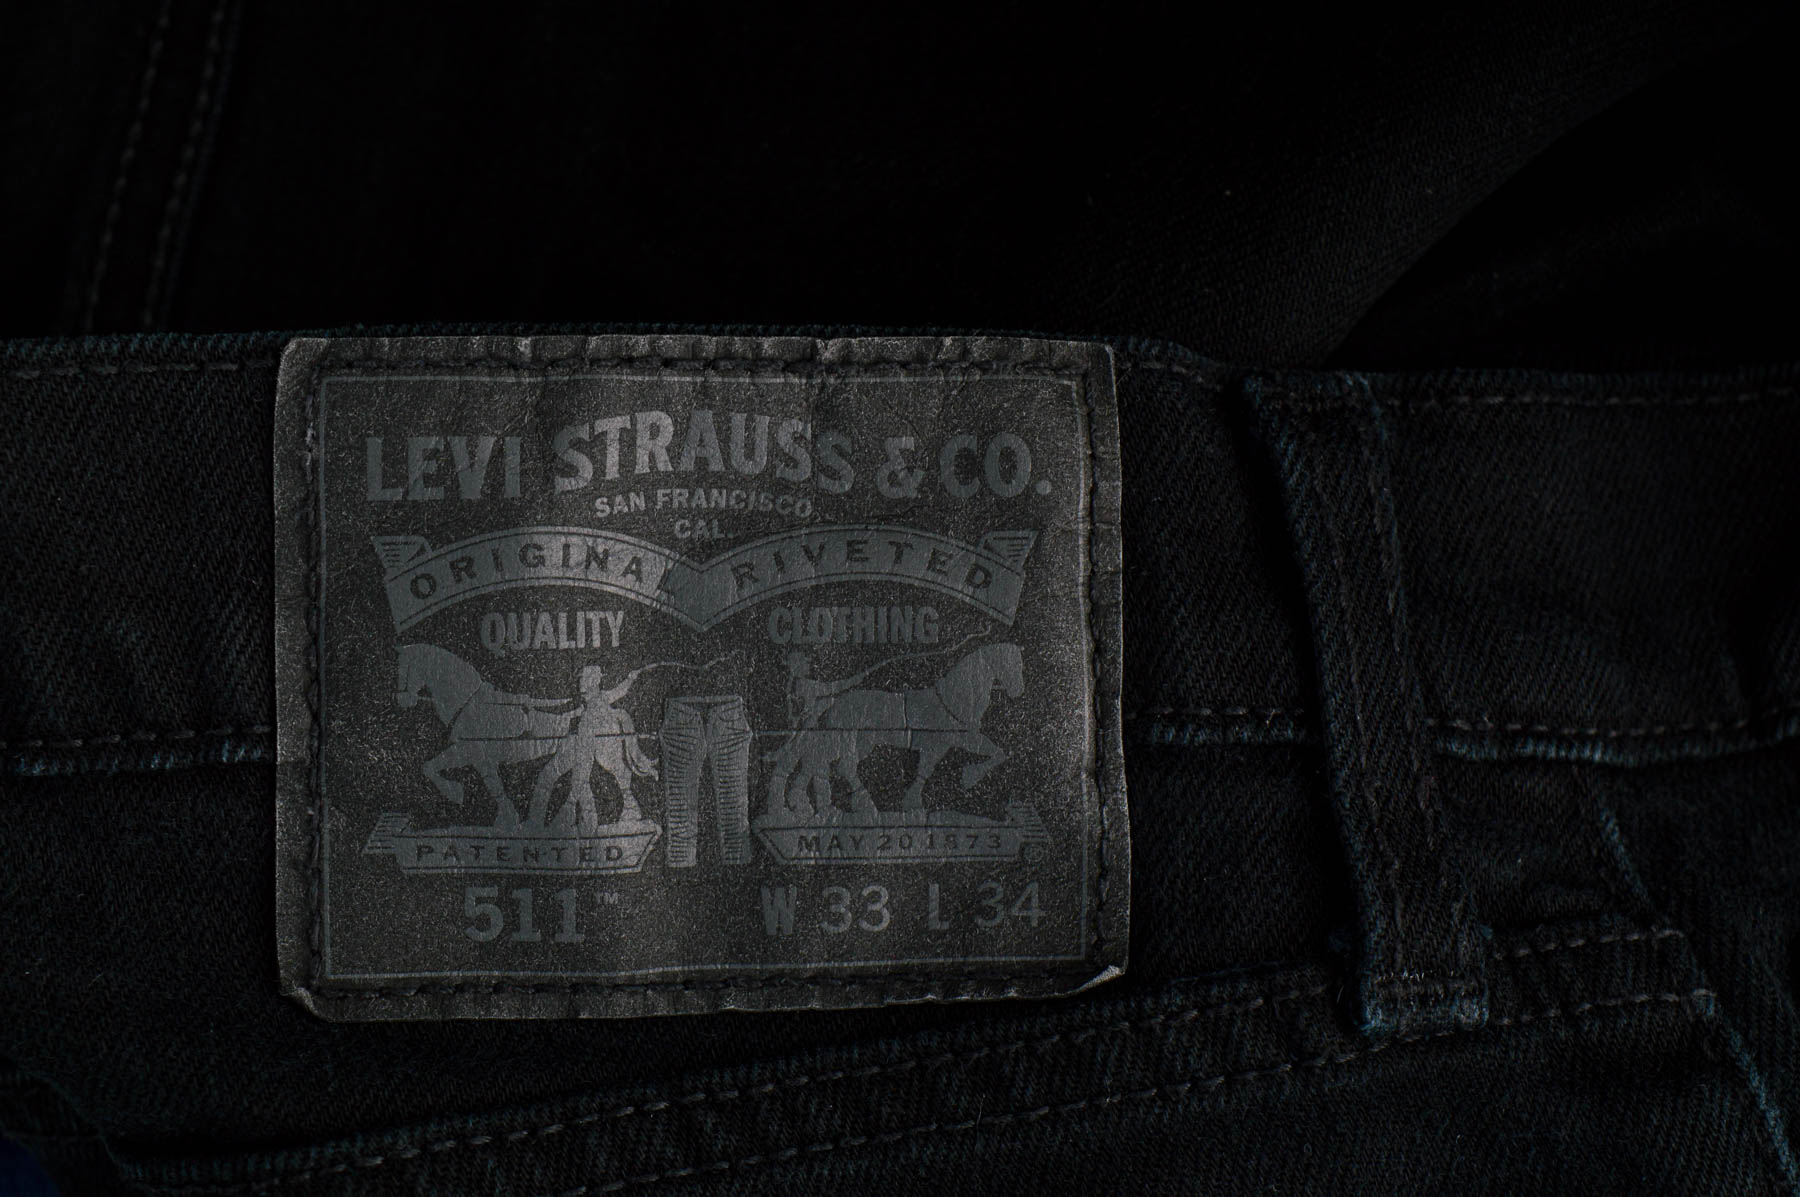 Men's jeans - Levi Strauss & Co. - 2